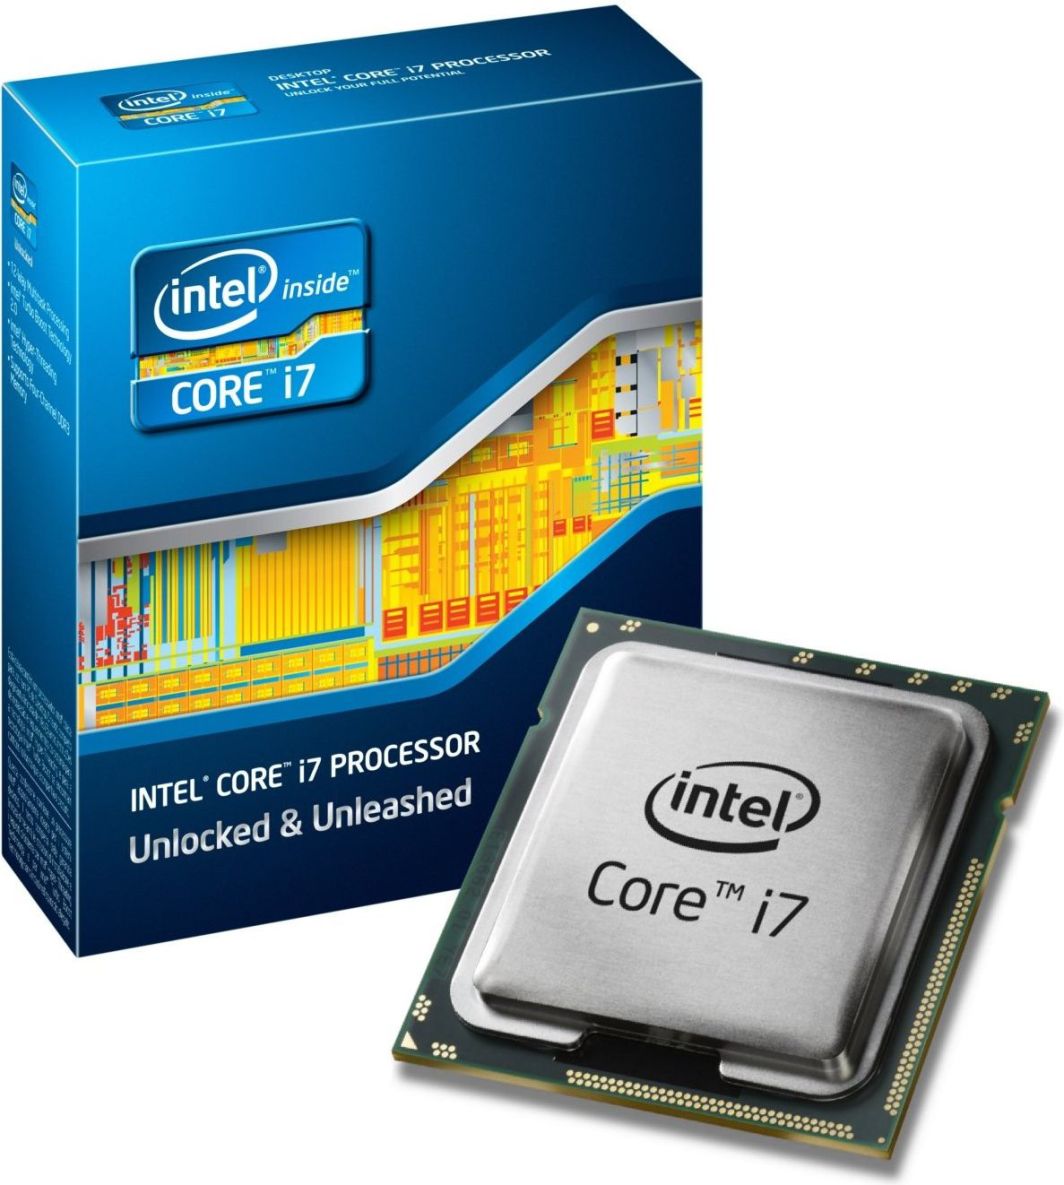 Intel 3 pro. Процессор Intel® Core™ i7. Процессор Интел Core i7. Процессор для ноутбука Intel Core i7. Процессор Интел коре ай 7.